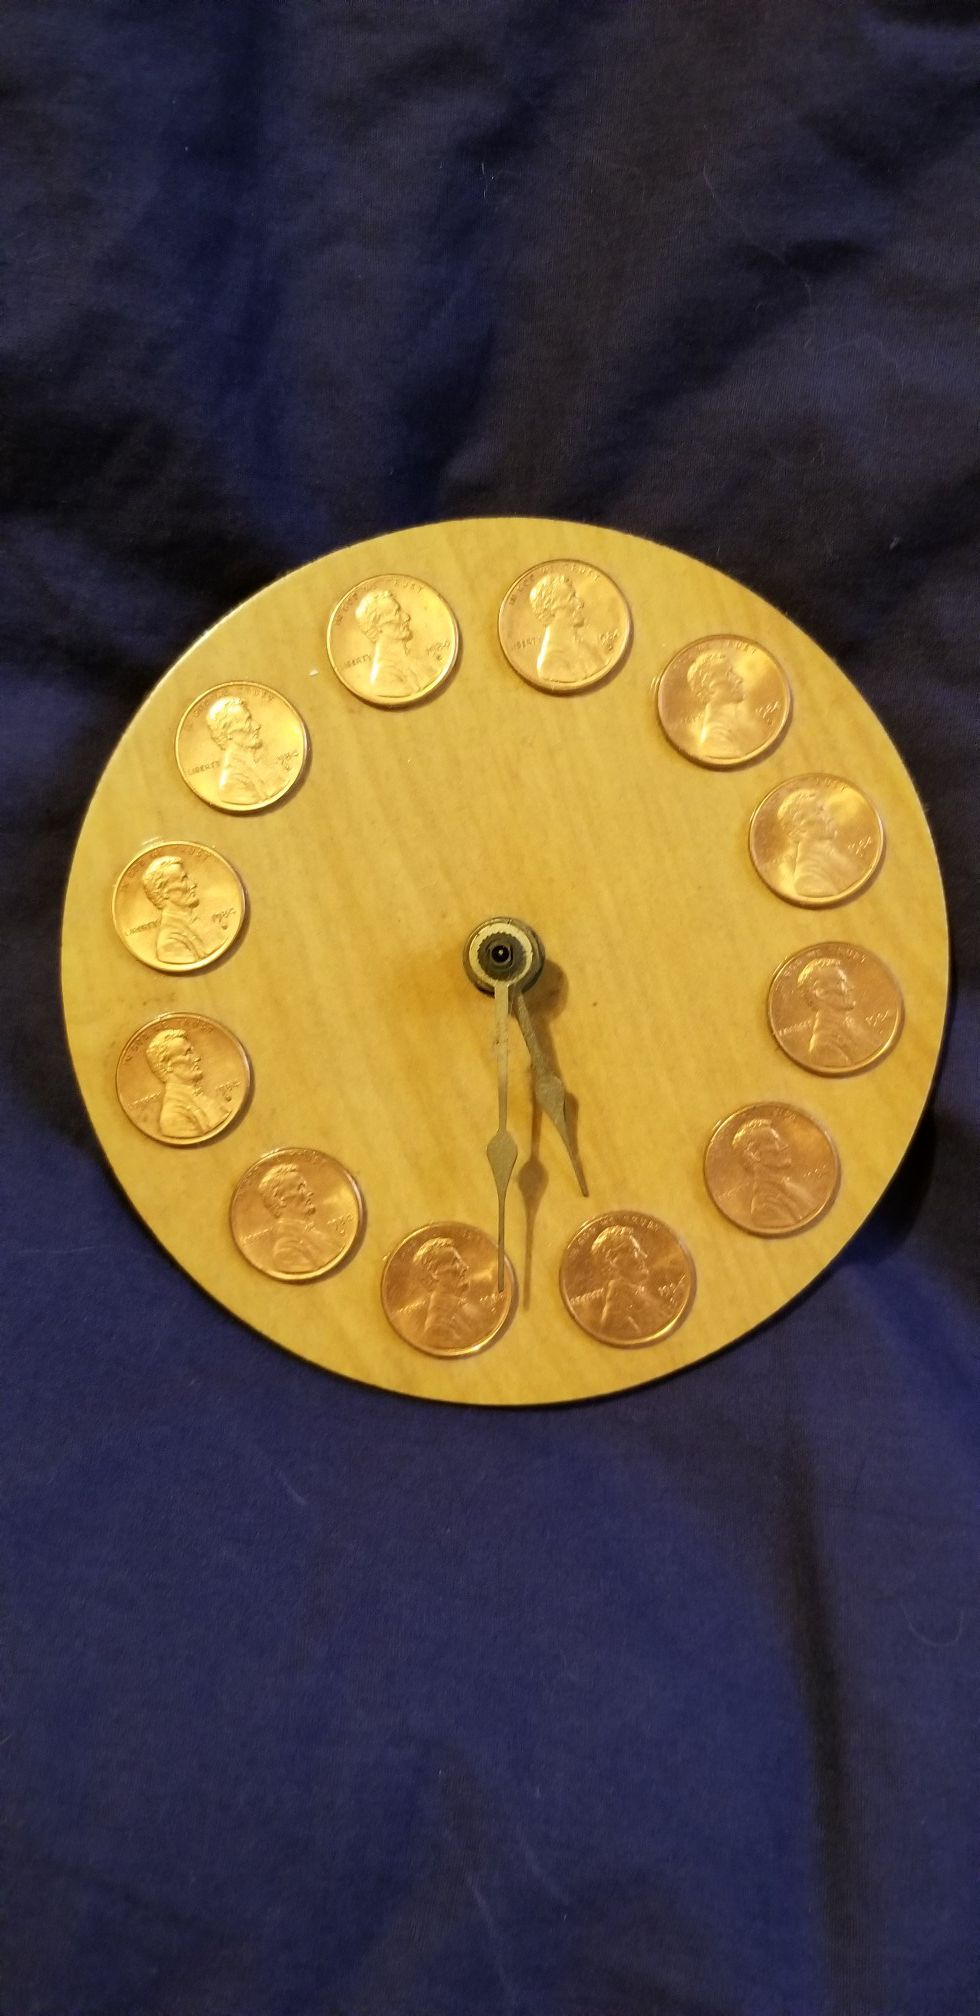 Penny clock